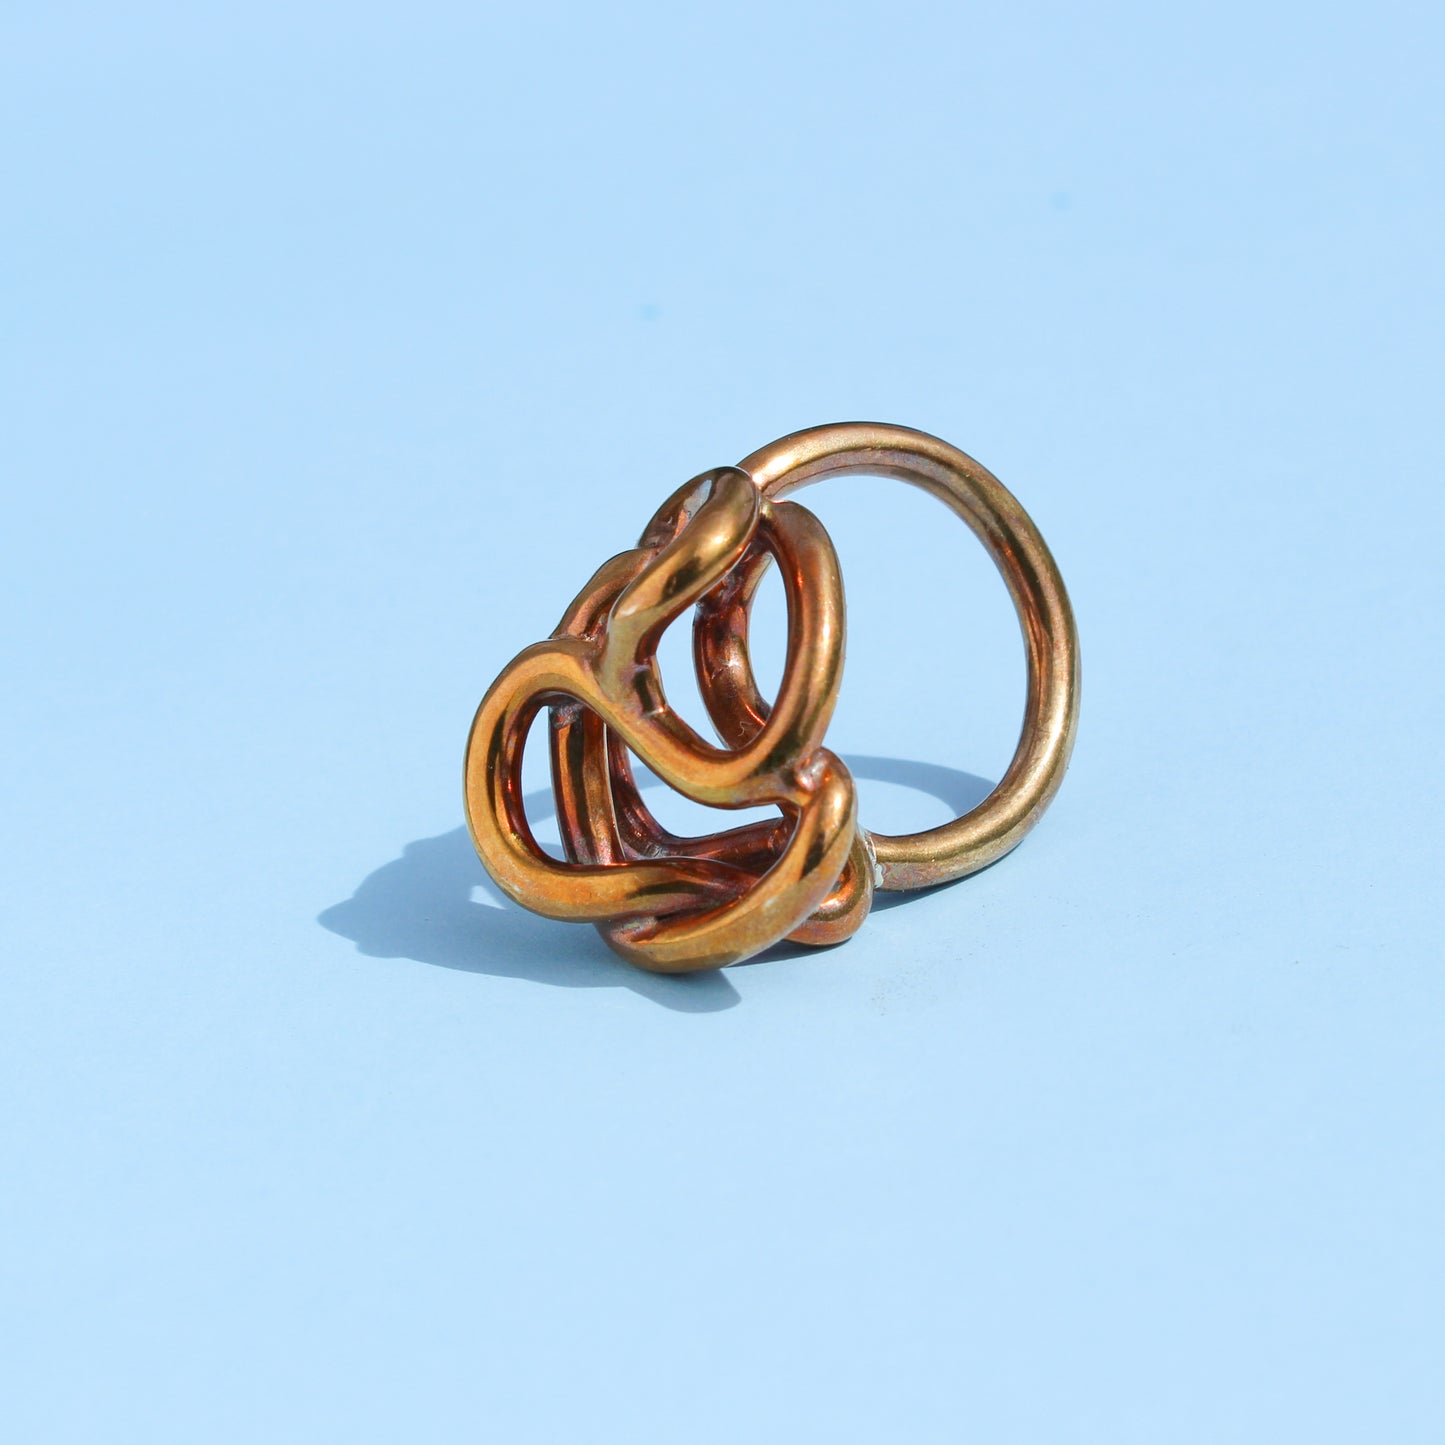 sculptural ring (1 of 1)